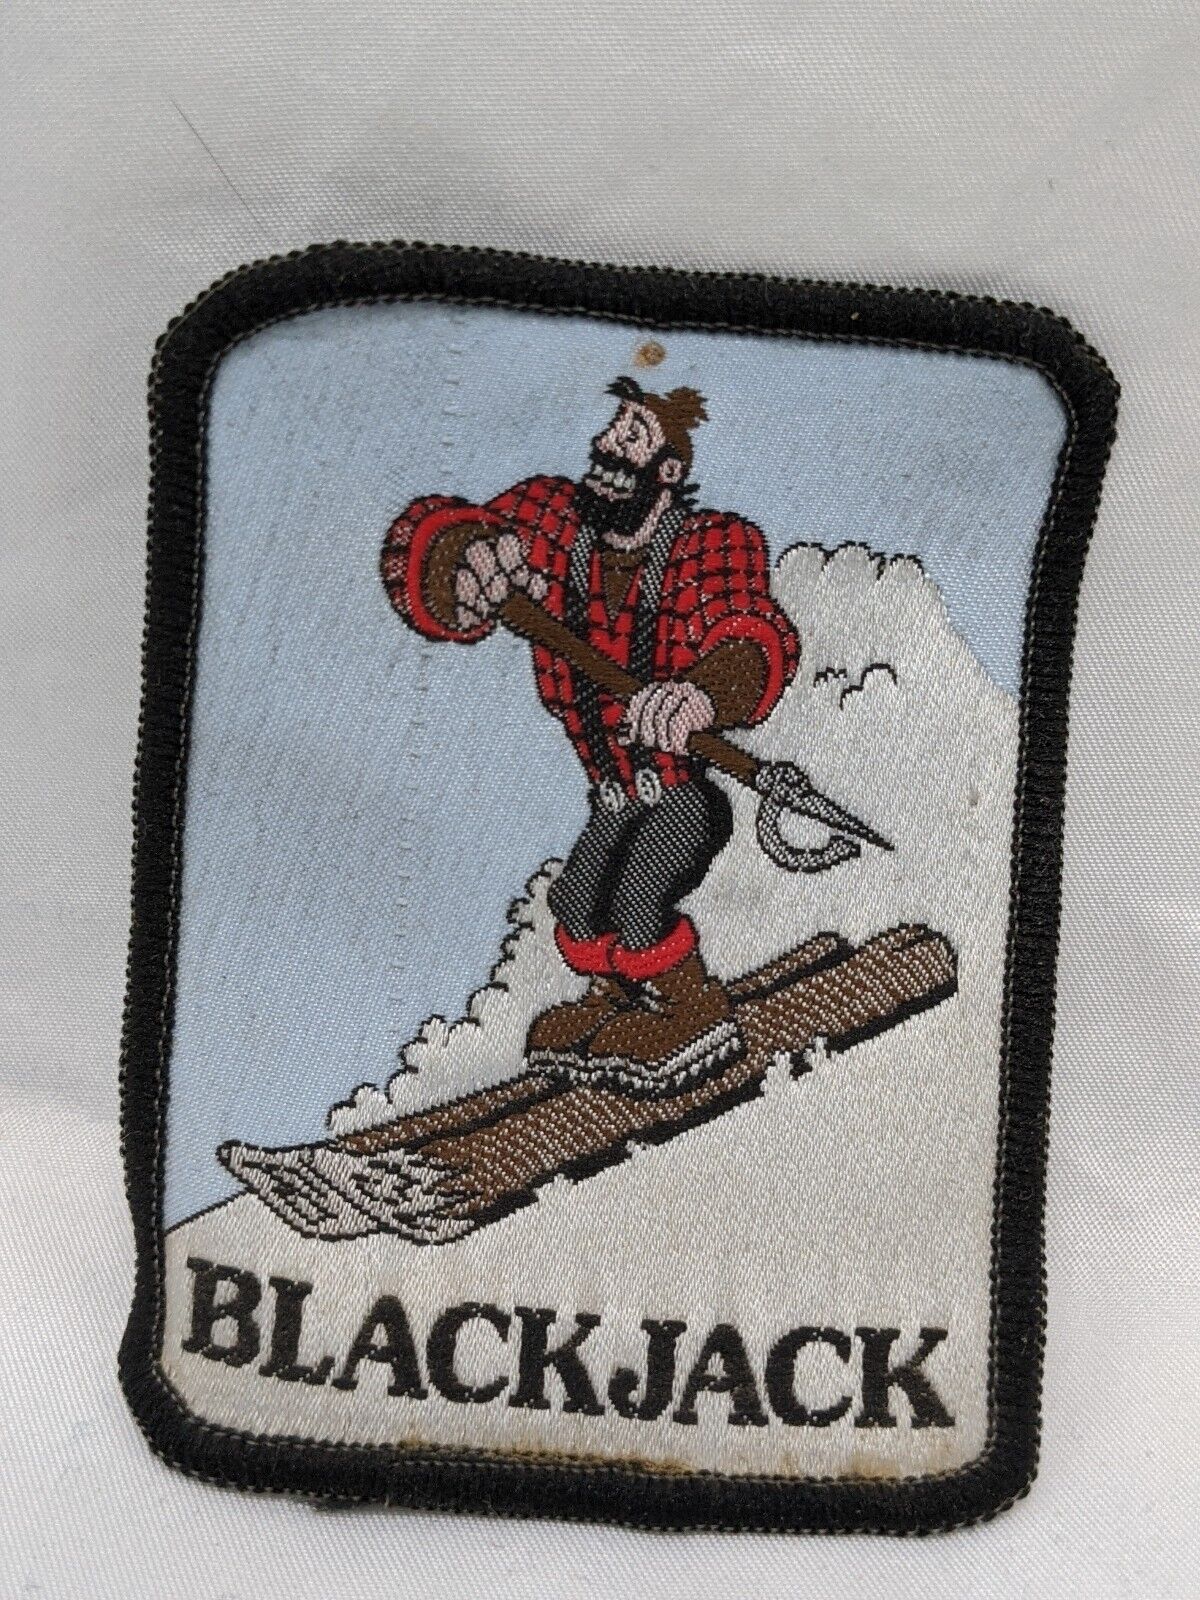 Vintage Michigan Blackjack Lumberjack Embroidered Iron On Patch 2 1/2\